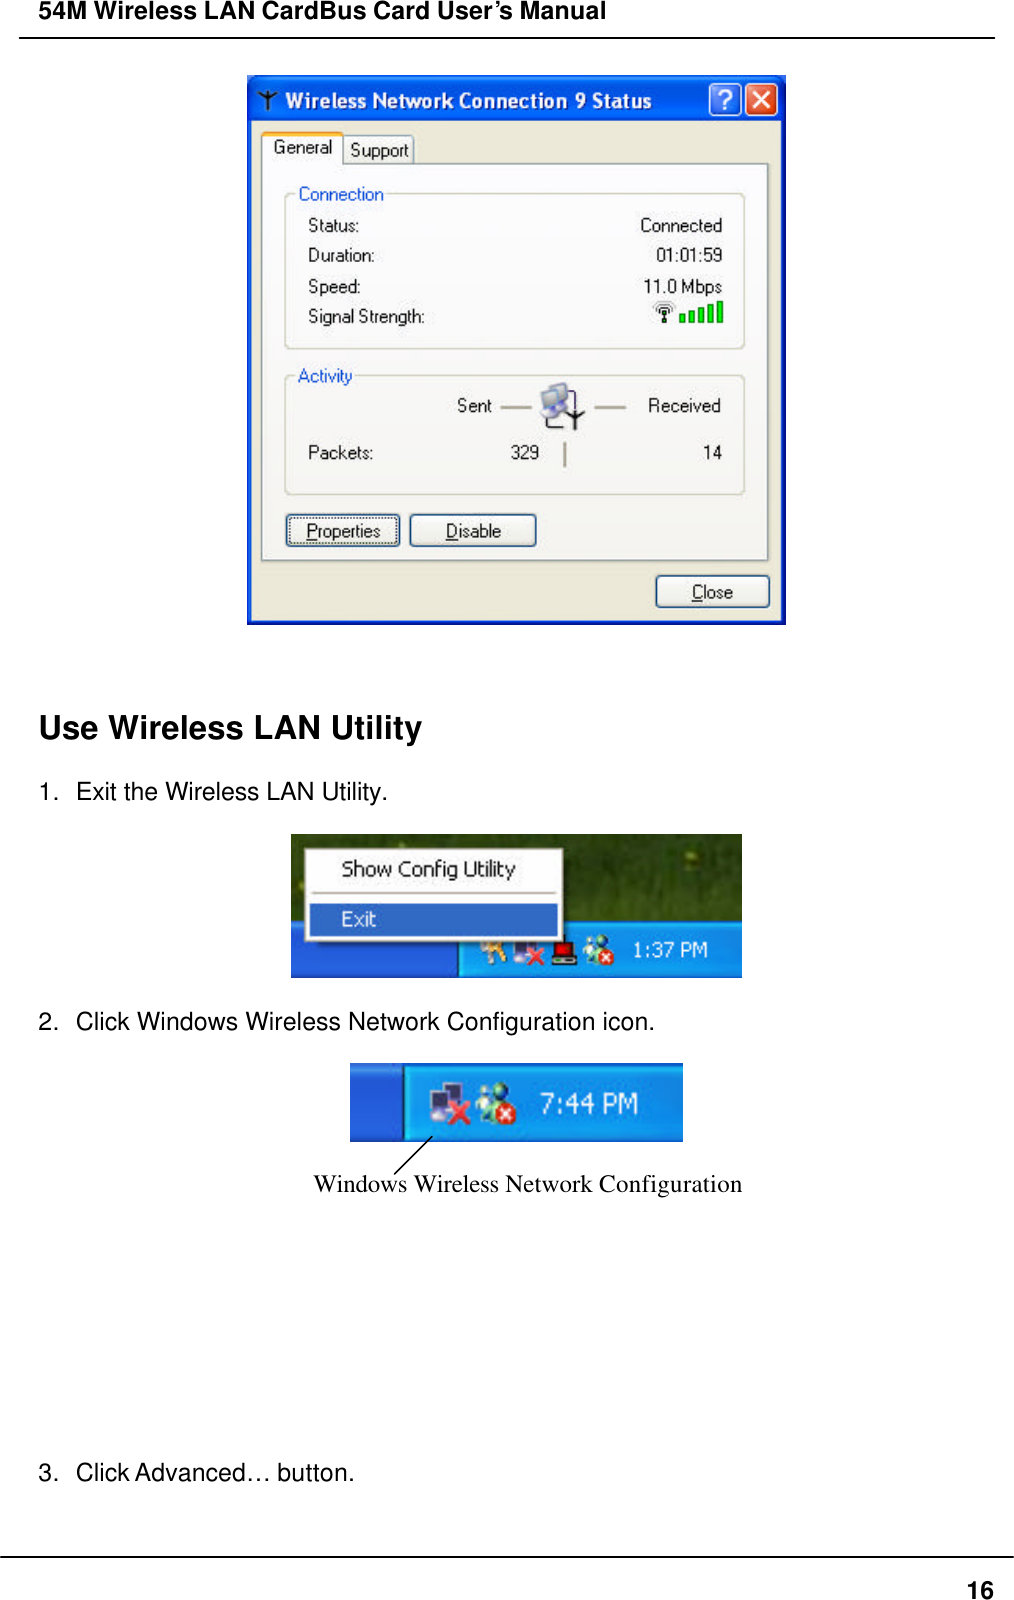 54M Wireless LAN CardBus Card User’s Manual  16     Use Wireless LAN Utility    1. Exit the Wireless LAN Utility.    2. Click Windows Wireless Network Configuration icon.    Windows Wireless Network Configuration          3. Click Advanced…  button.  